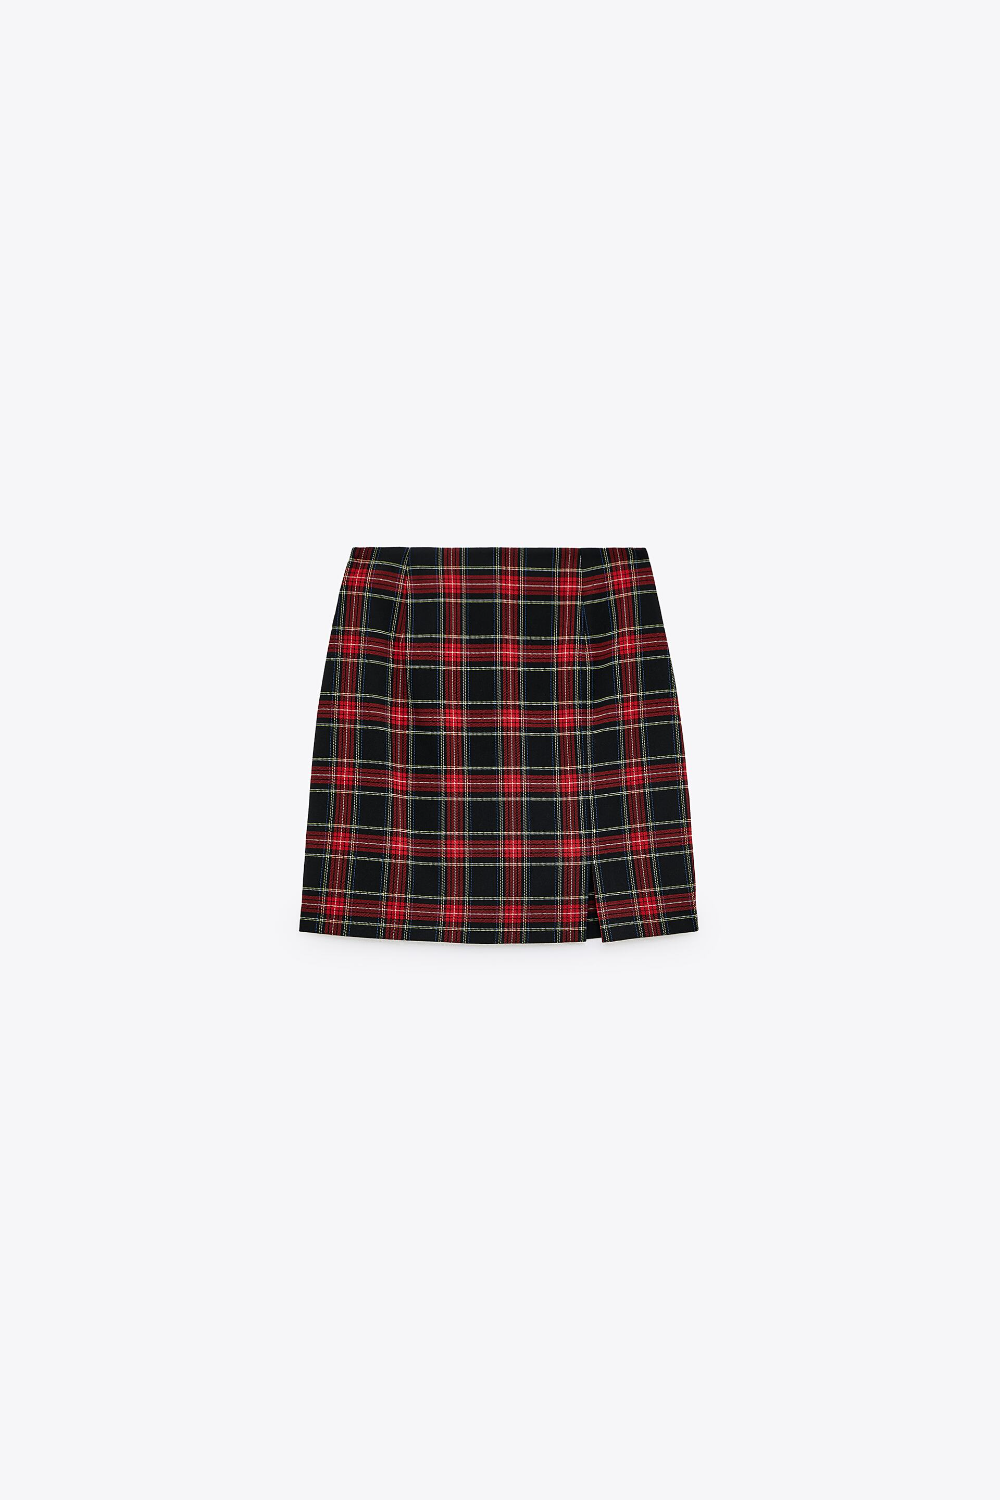 https://flyfiercefab.com/wp-content/uploads/2020/12/Zara-Plaid-Mini-Skirt.png